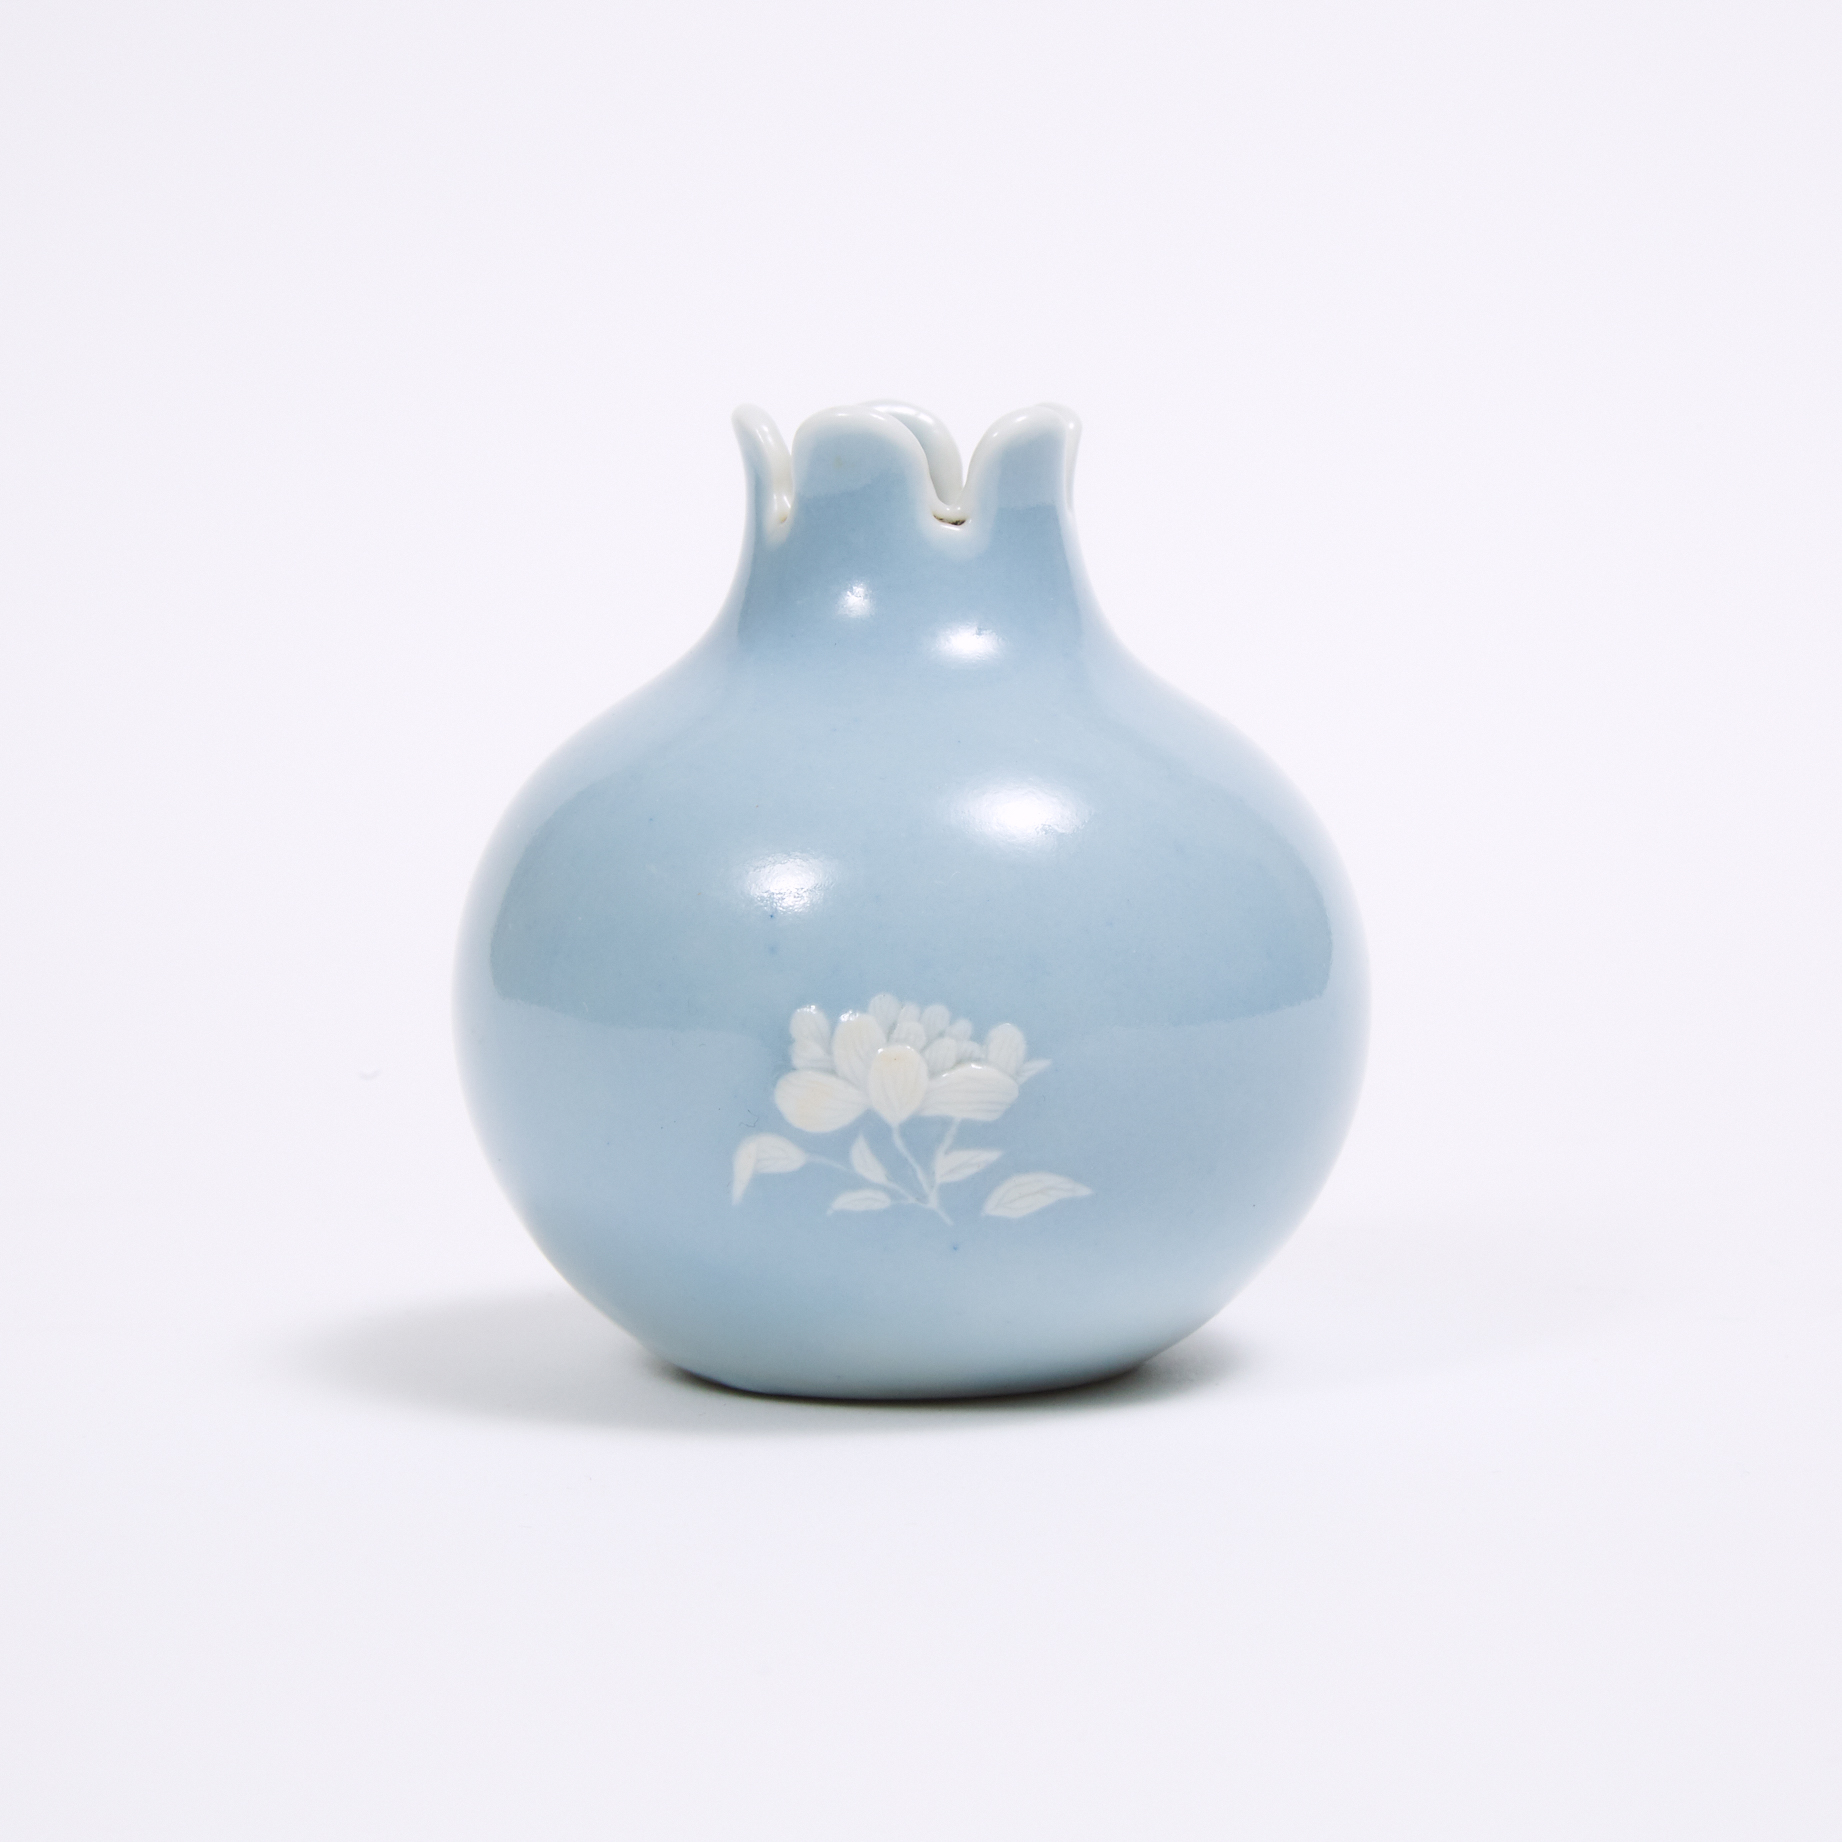 A Clair-de-Lune Glazed Pomegranate-Form Vase, Qing Dynasty